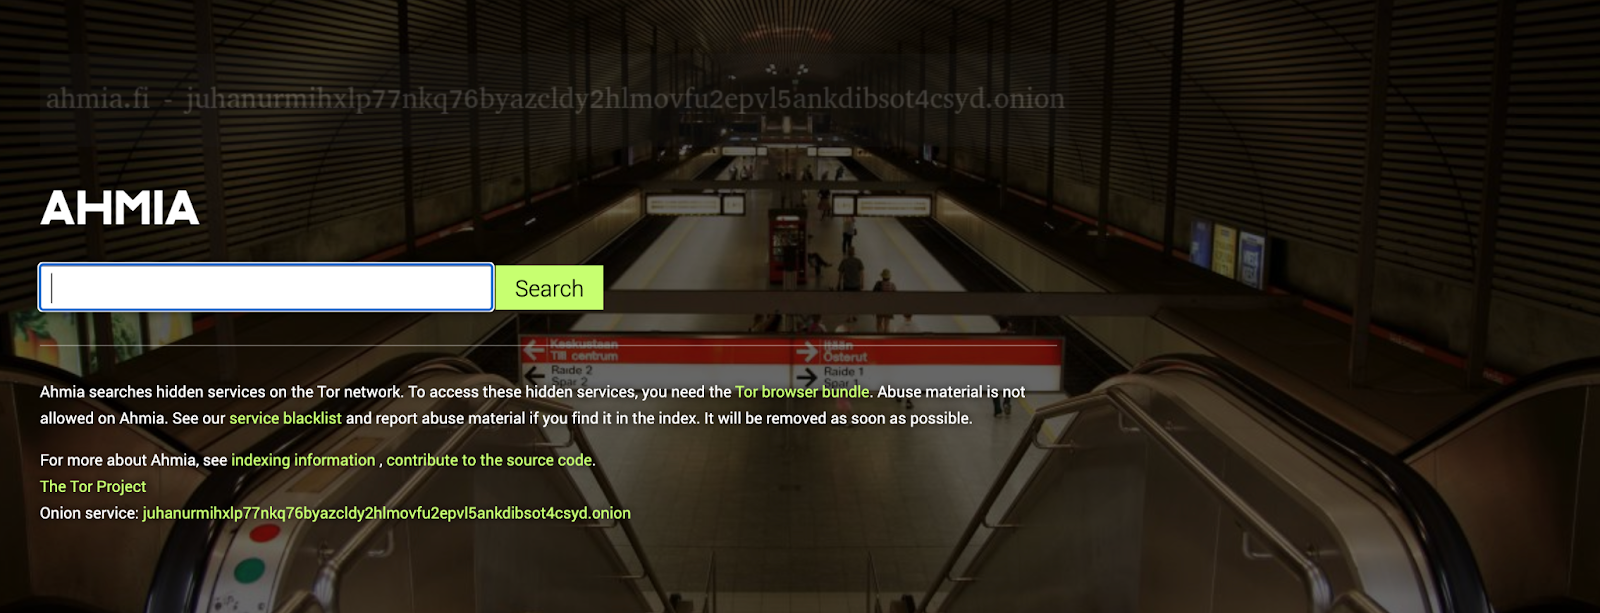 Screenshot di Ahmia sul dark web